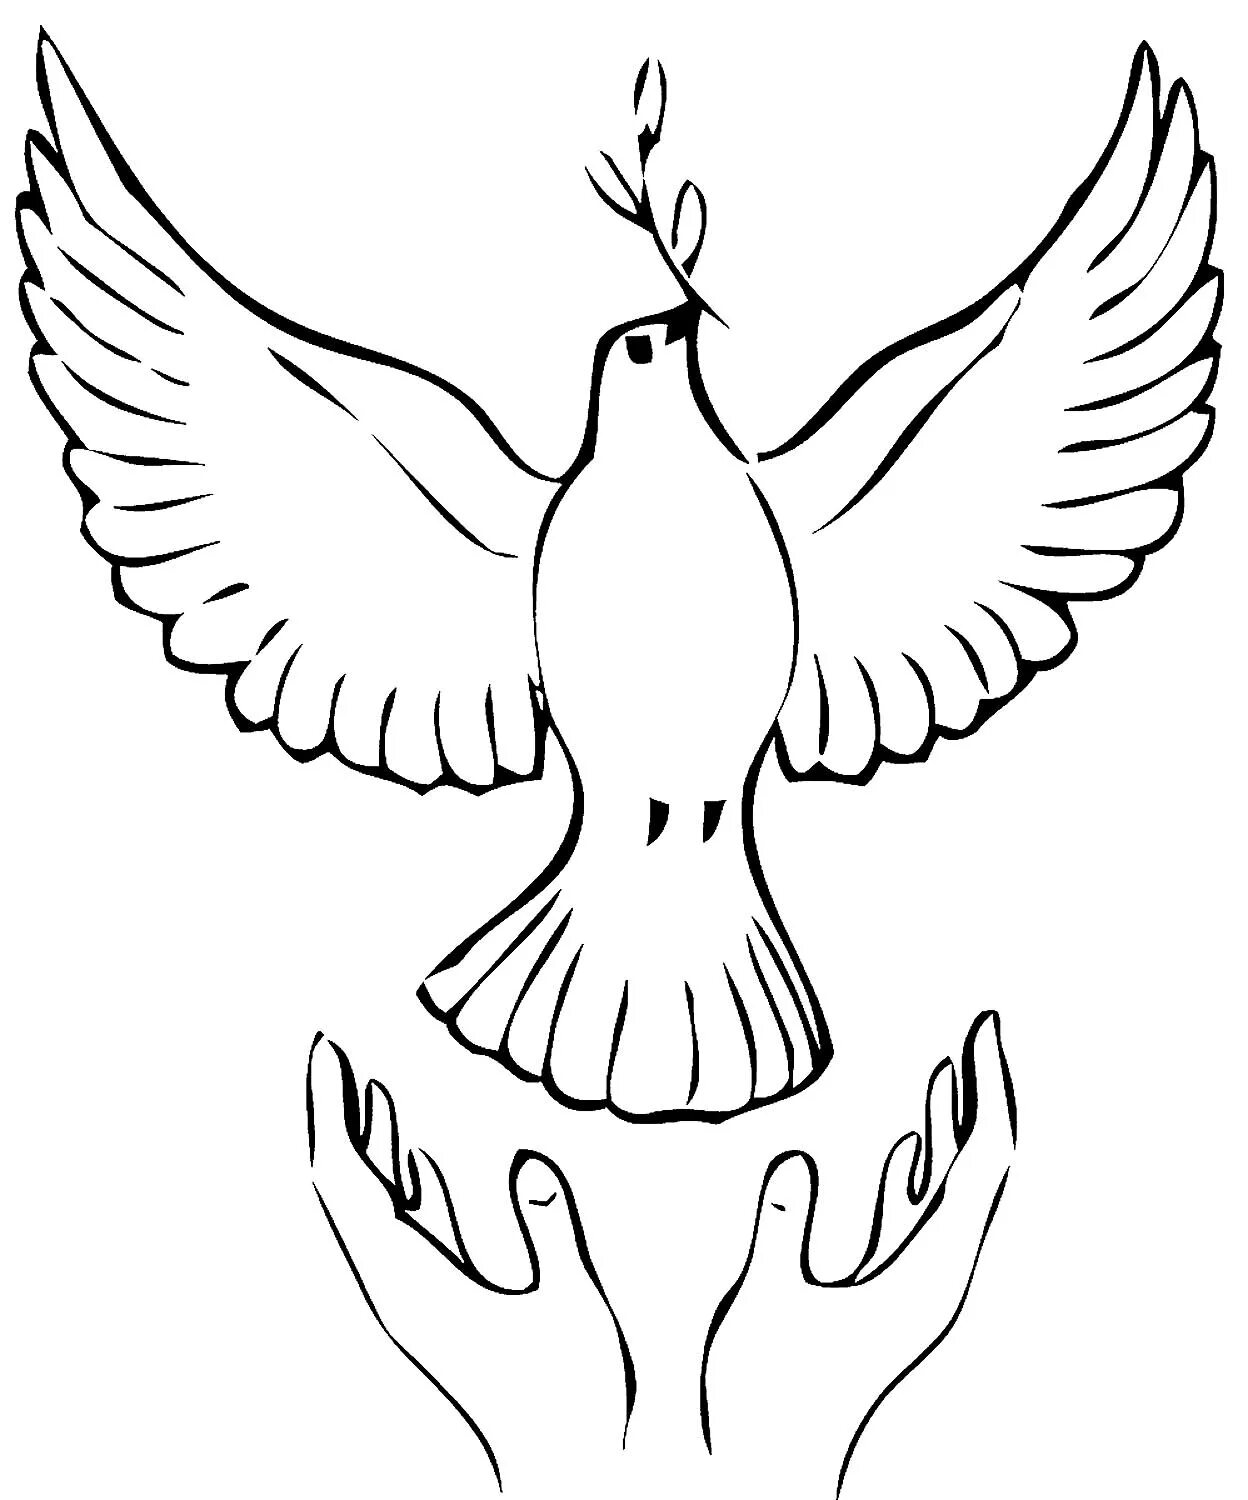 Fun peace dove pattern for kids